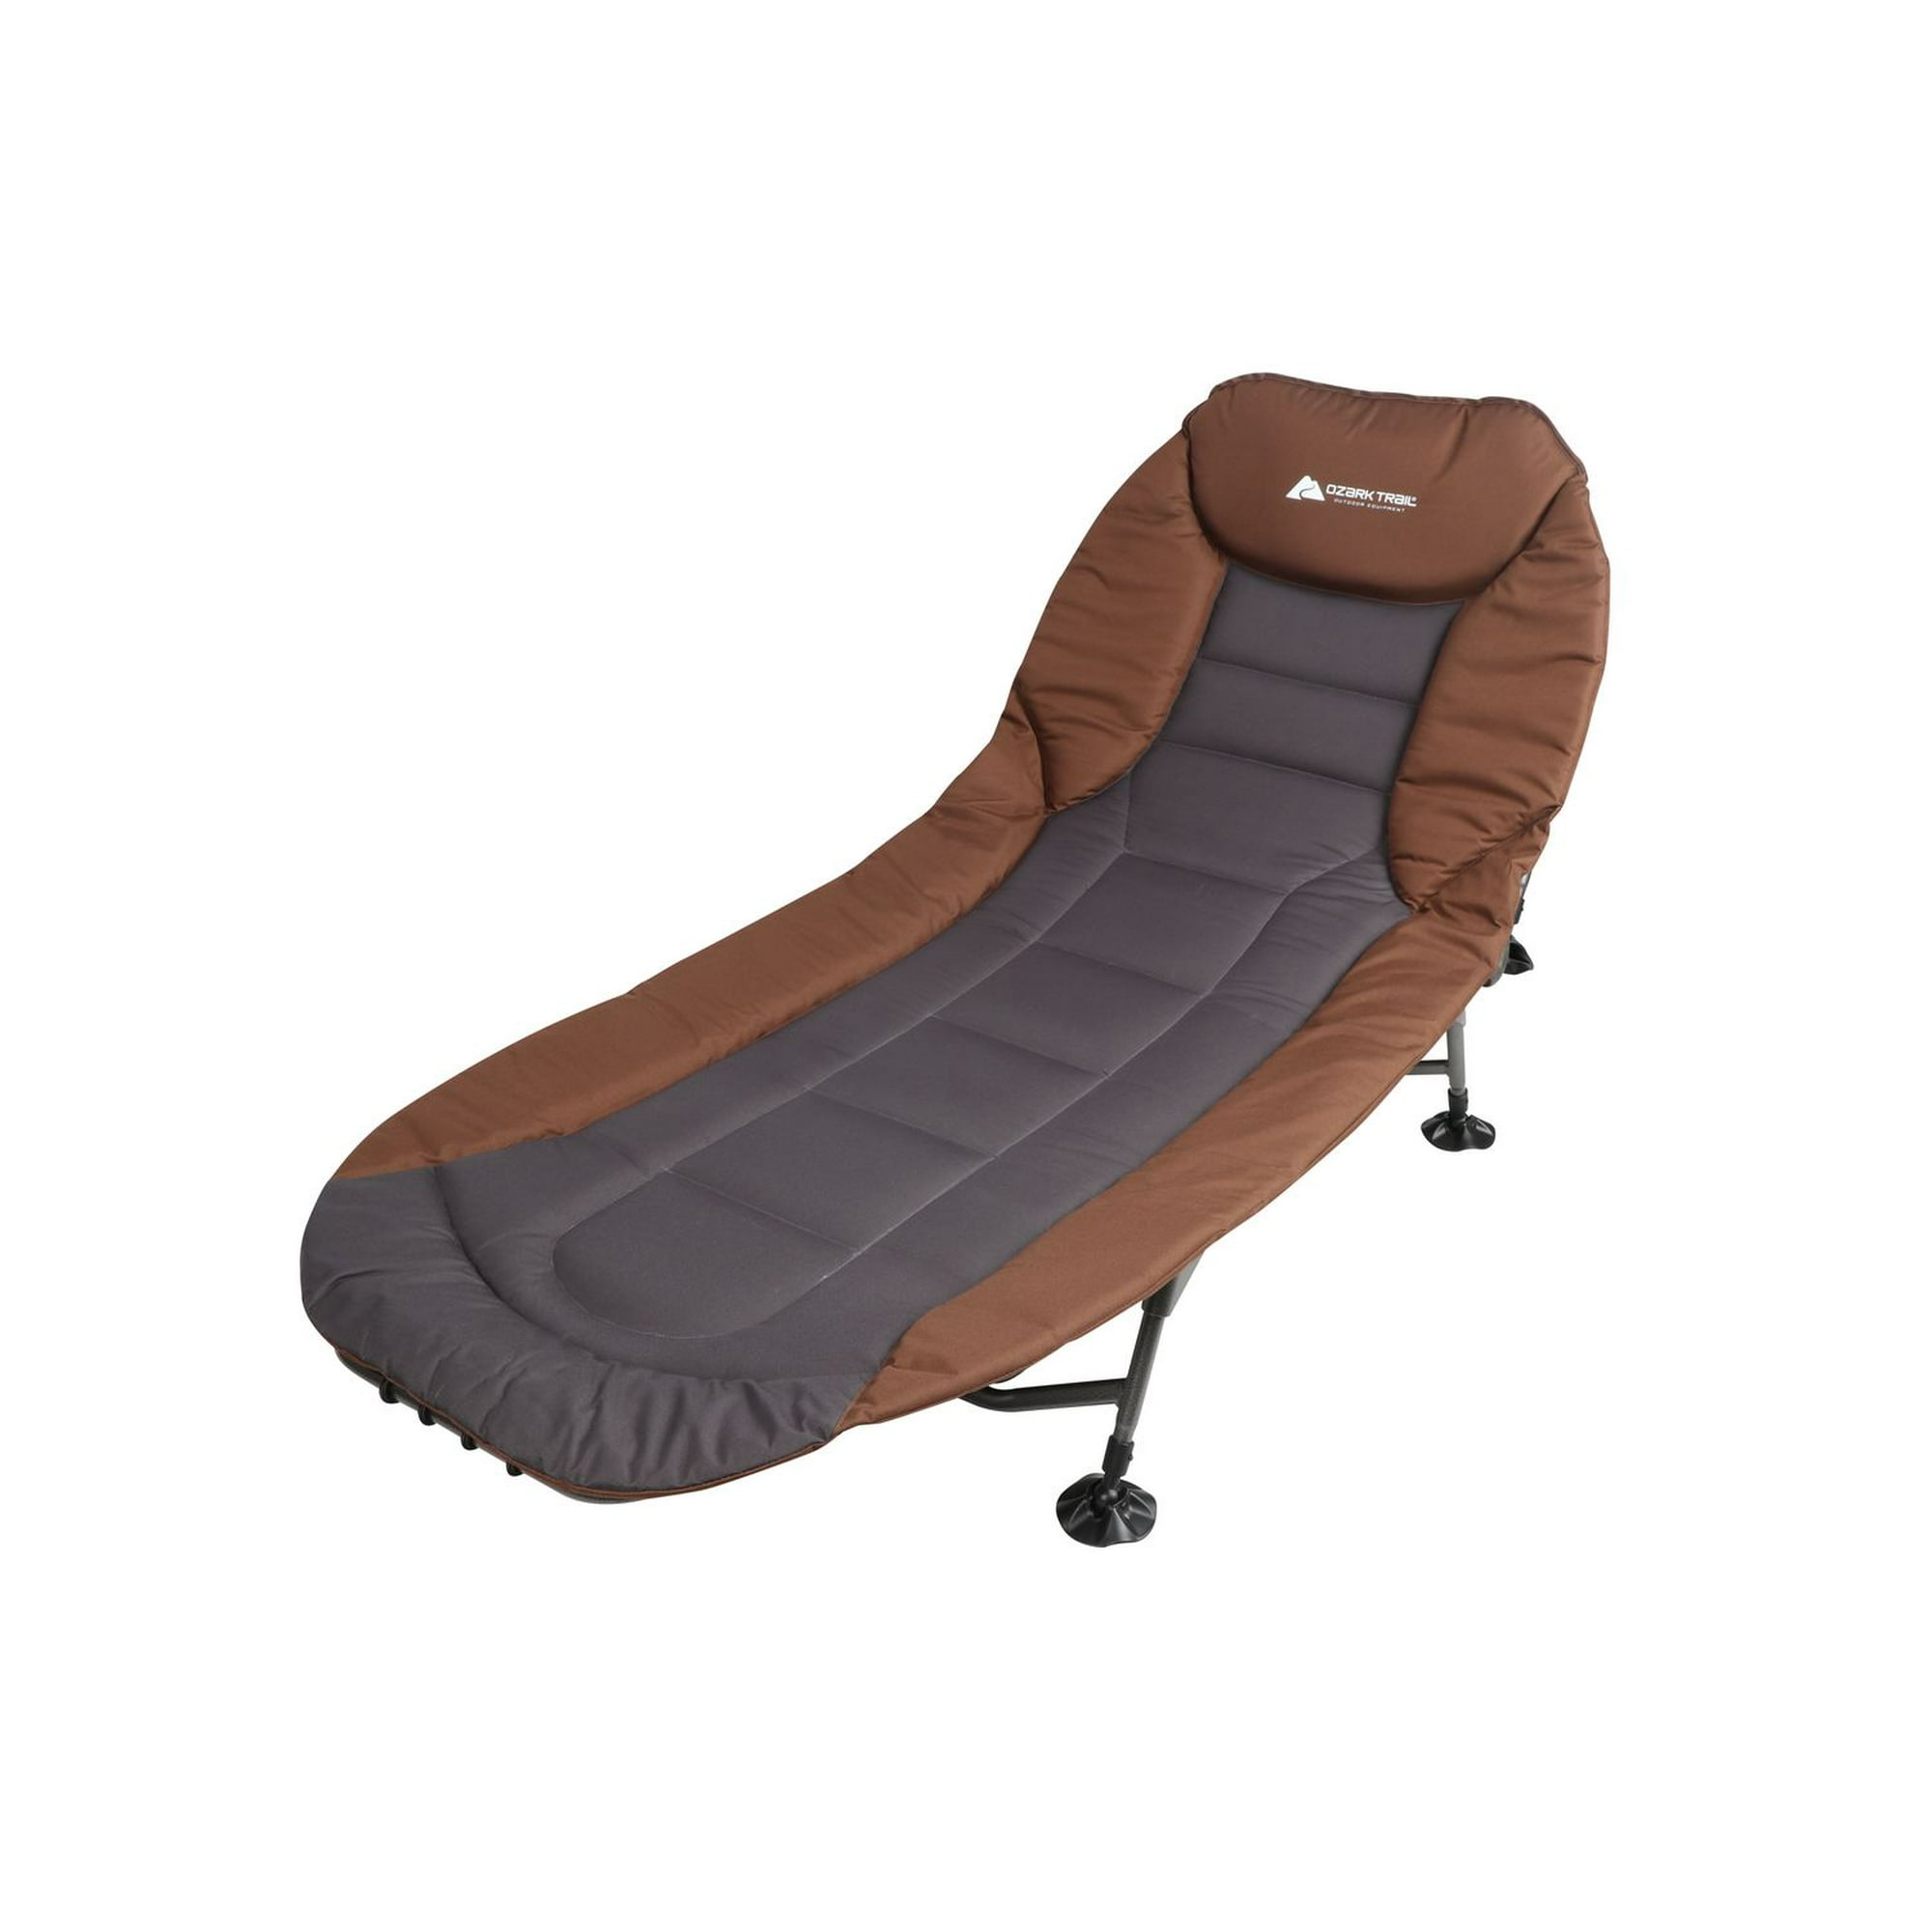 5 position adjustable backrest foam padded carp fishing & camping